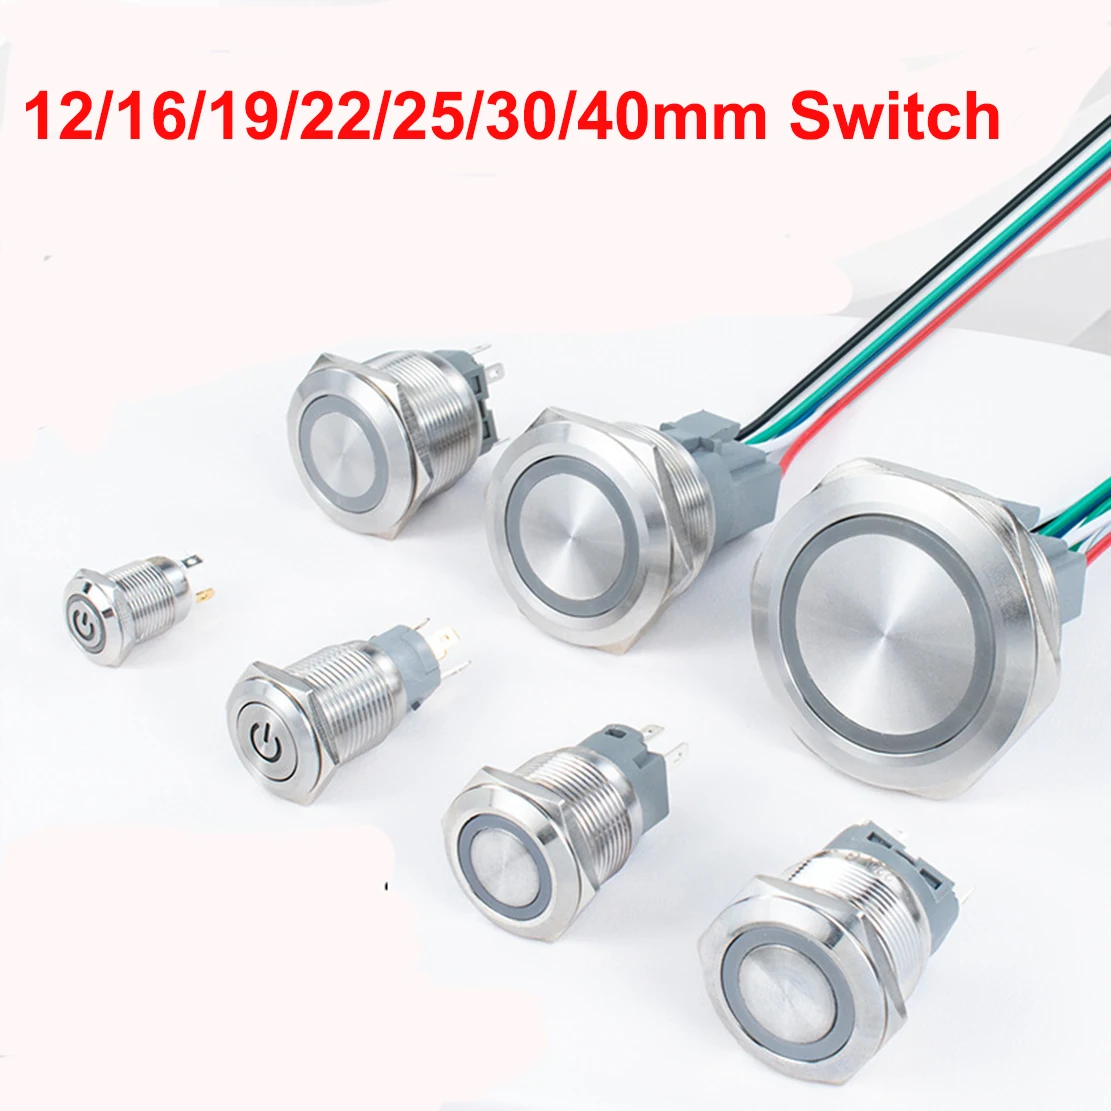 12mm 16mm 19mm 22mm 25mm 30mm 40mm metal reset aon switch jog round power symbol light thumb200